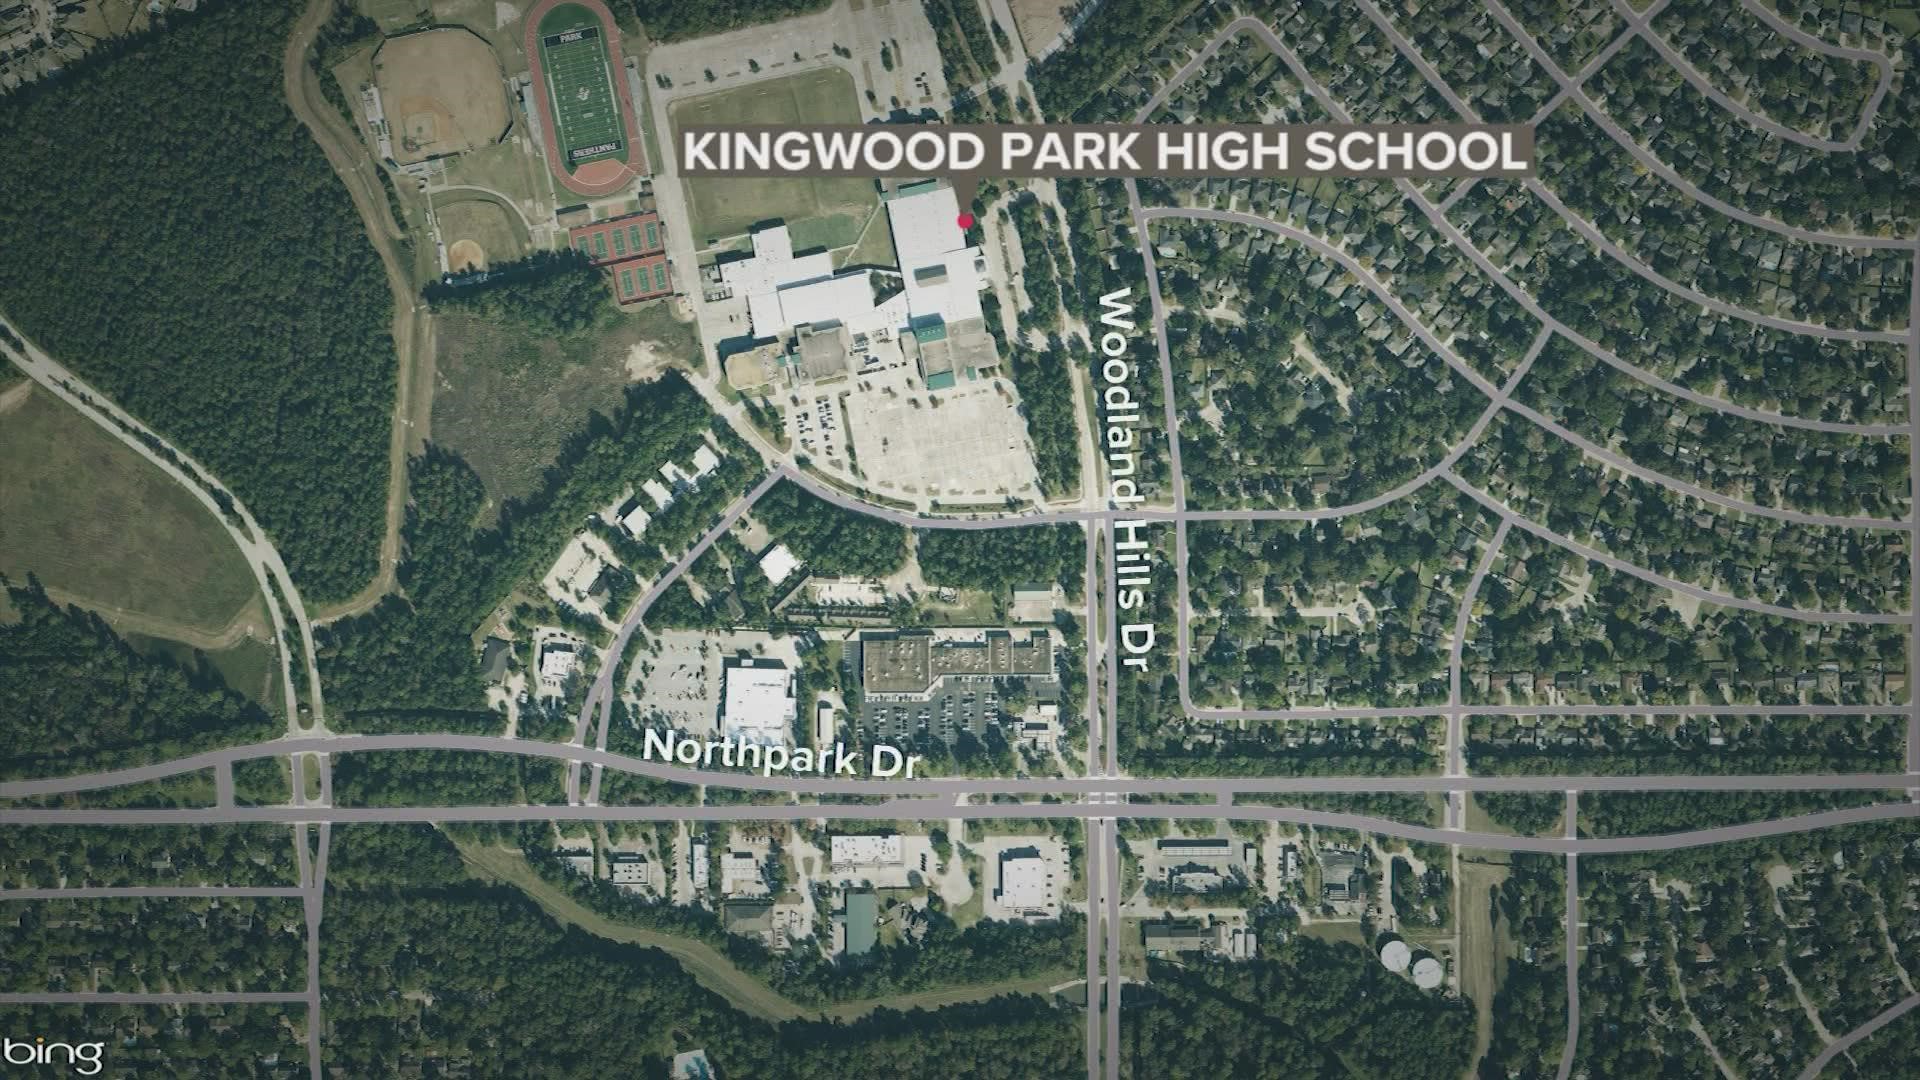 Kingwood Park High School addresses recent fights, rumors